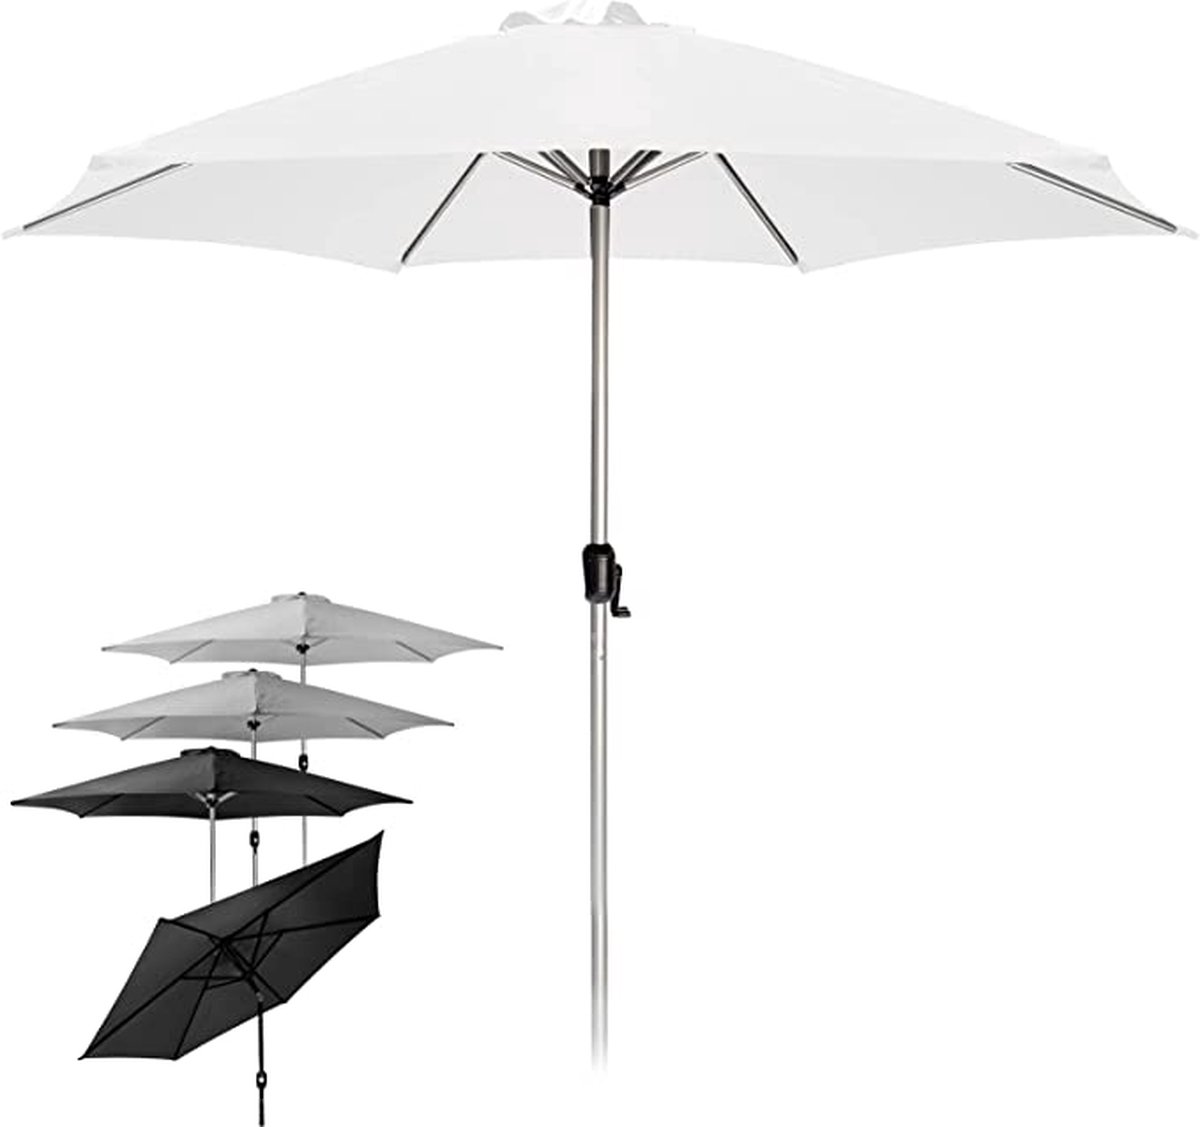 Parasol met verlichting - Tuinparasol - Stokparasol - Handslinger - 270 cm - Wit